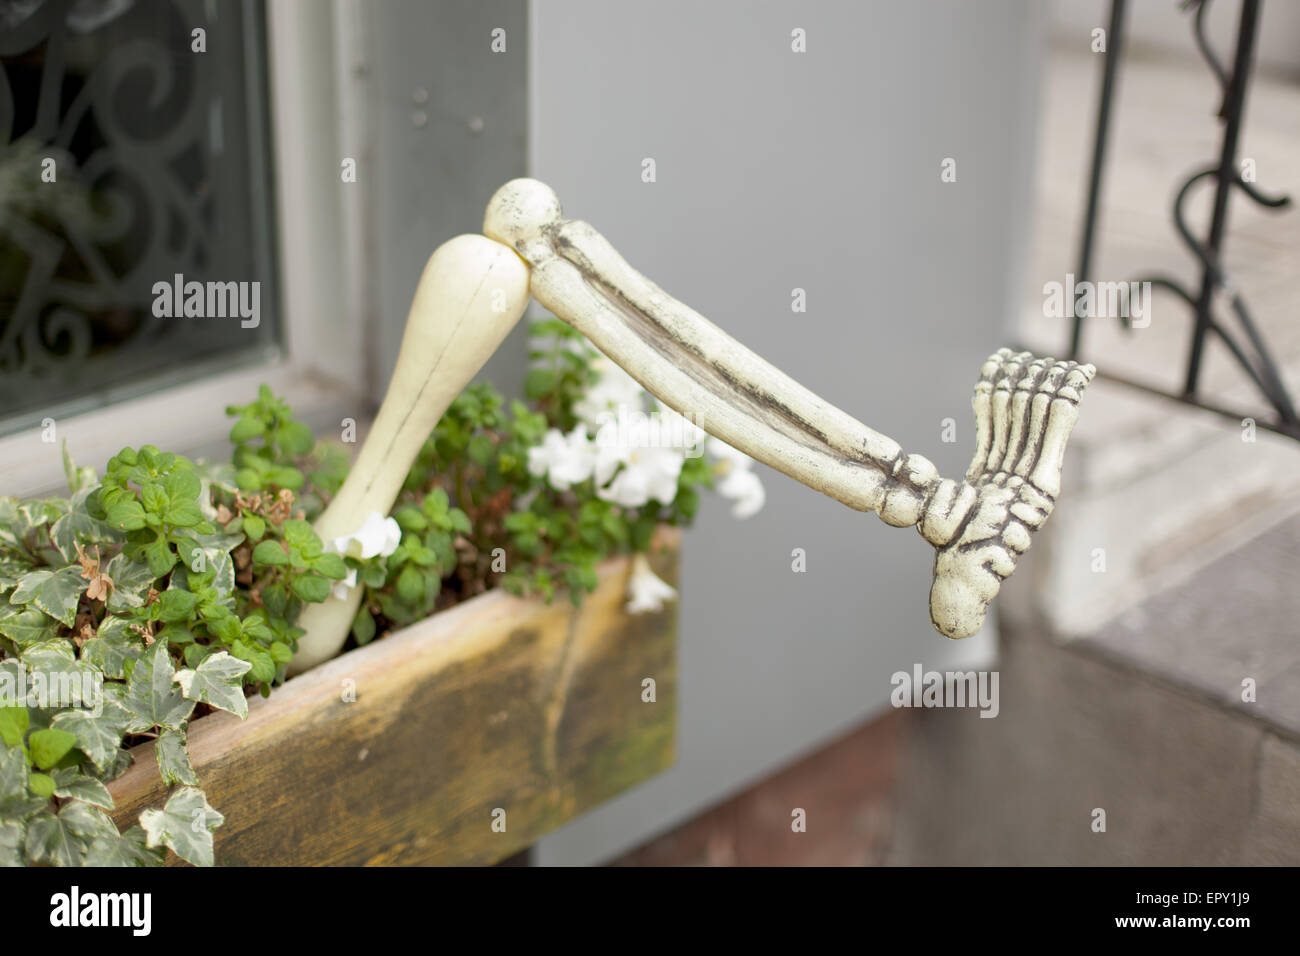 Artificial human leg bone in a window basket Stock Photo